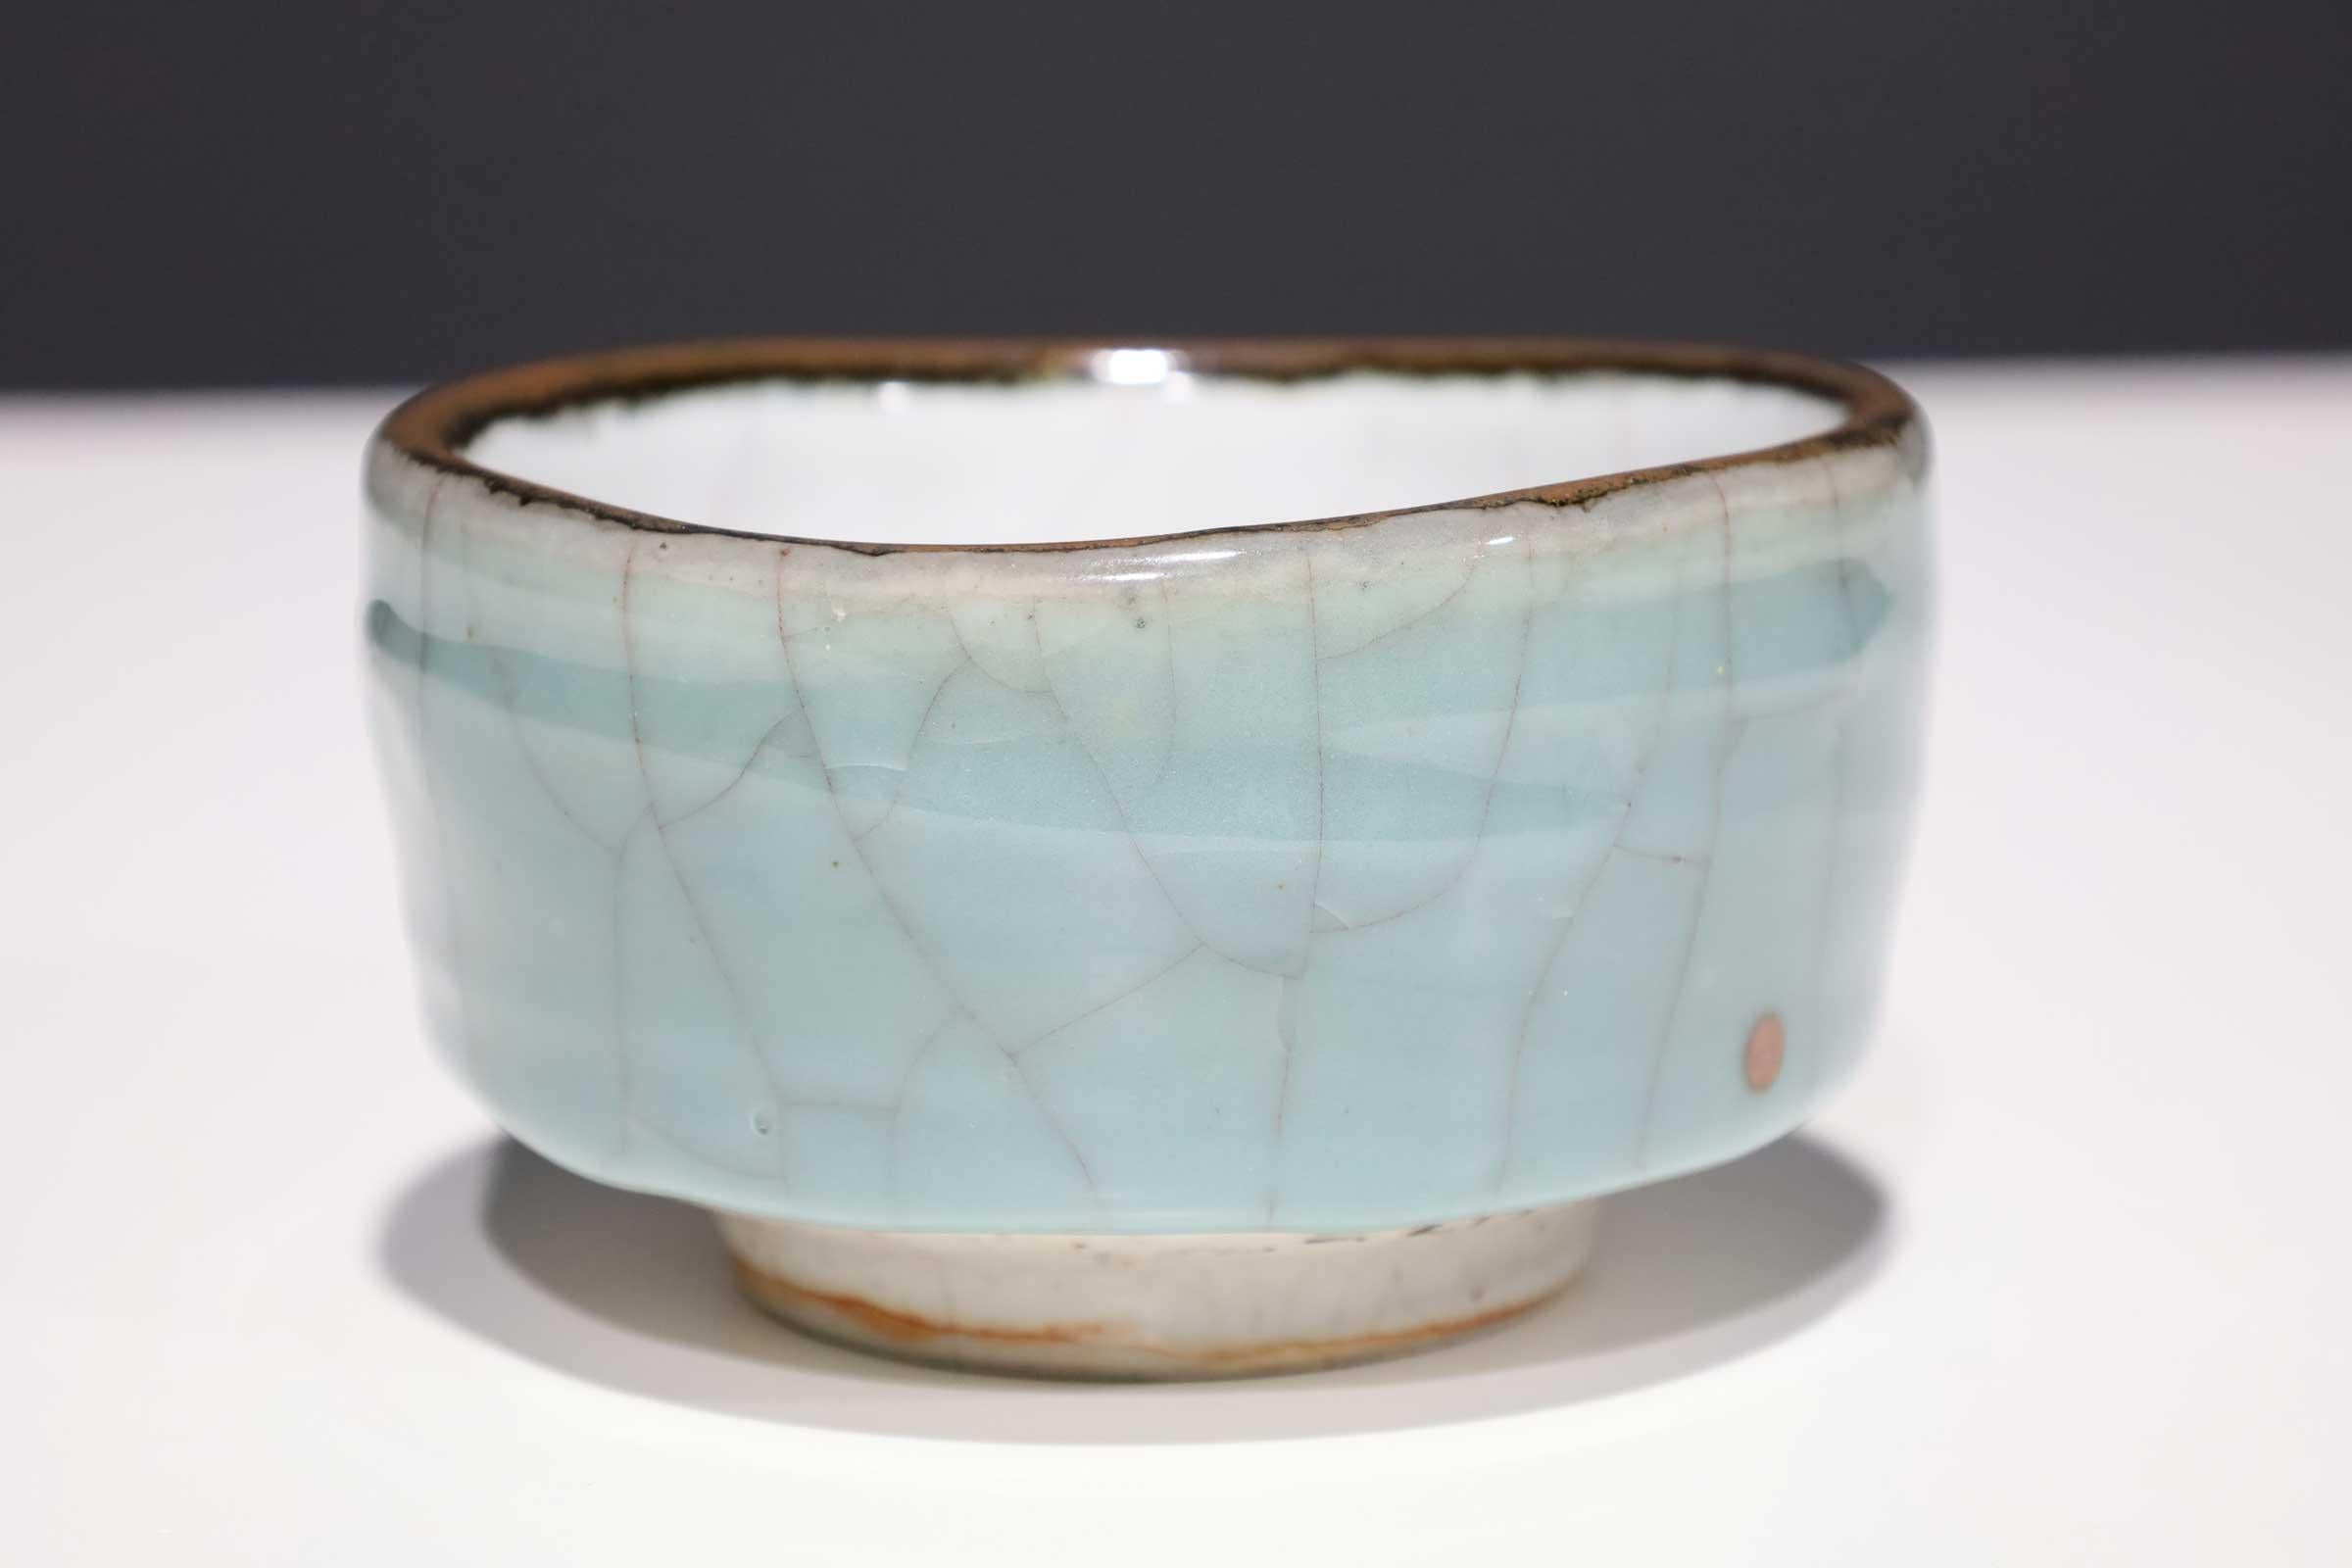 North American Small Ceramic Bowl by Albert Green